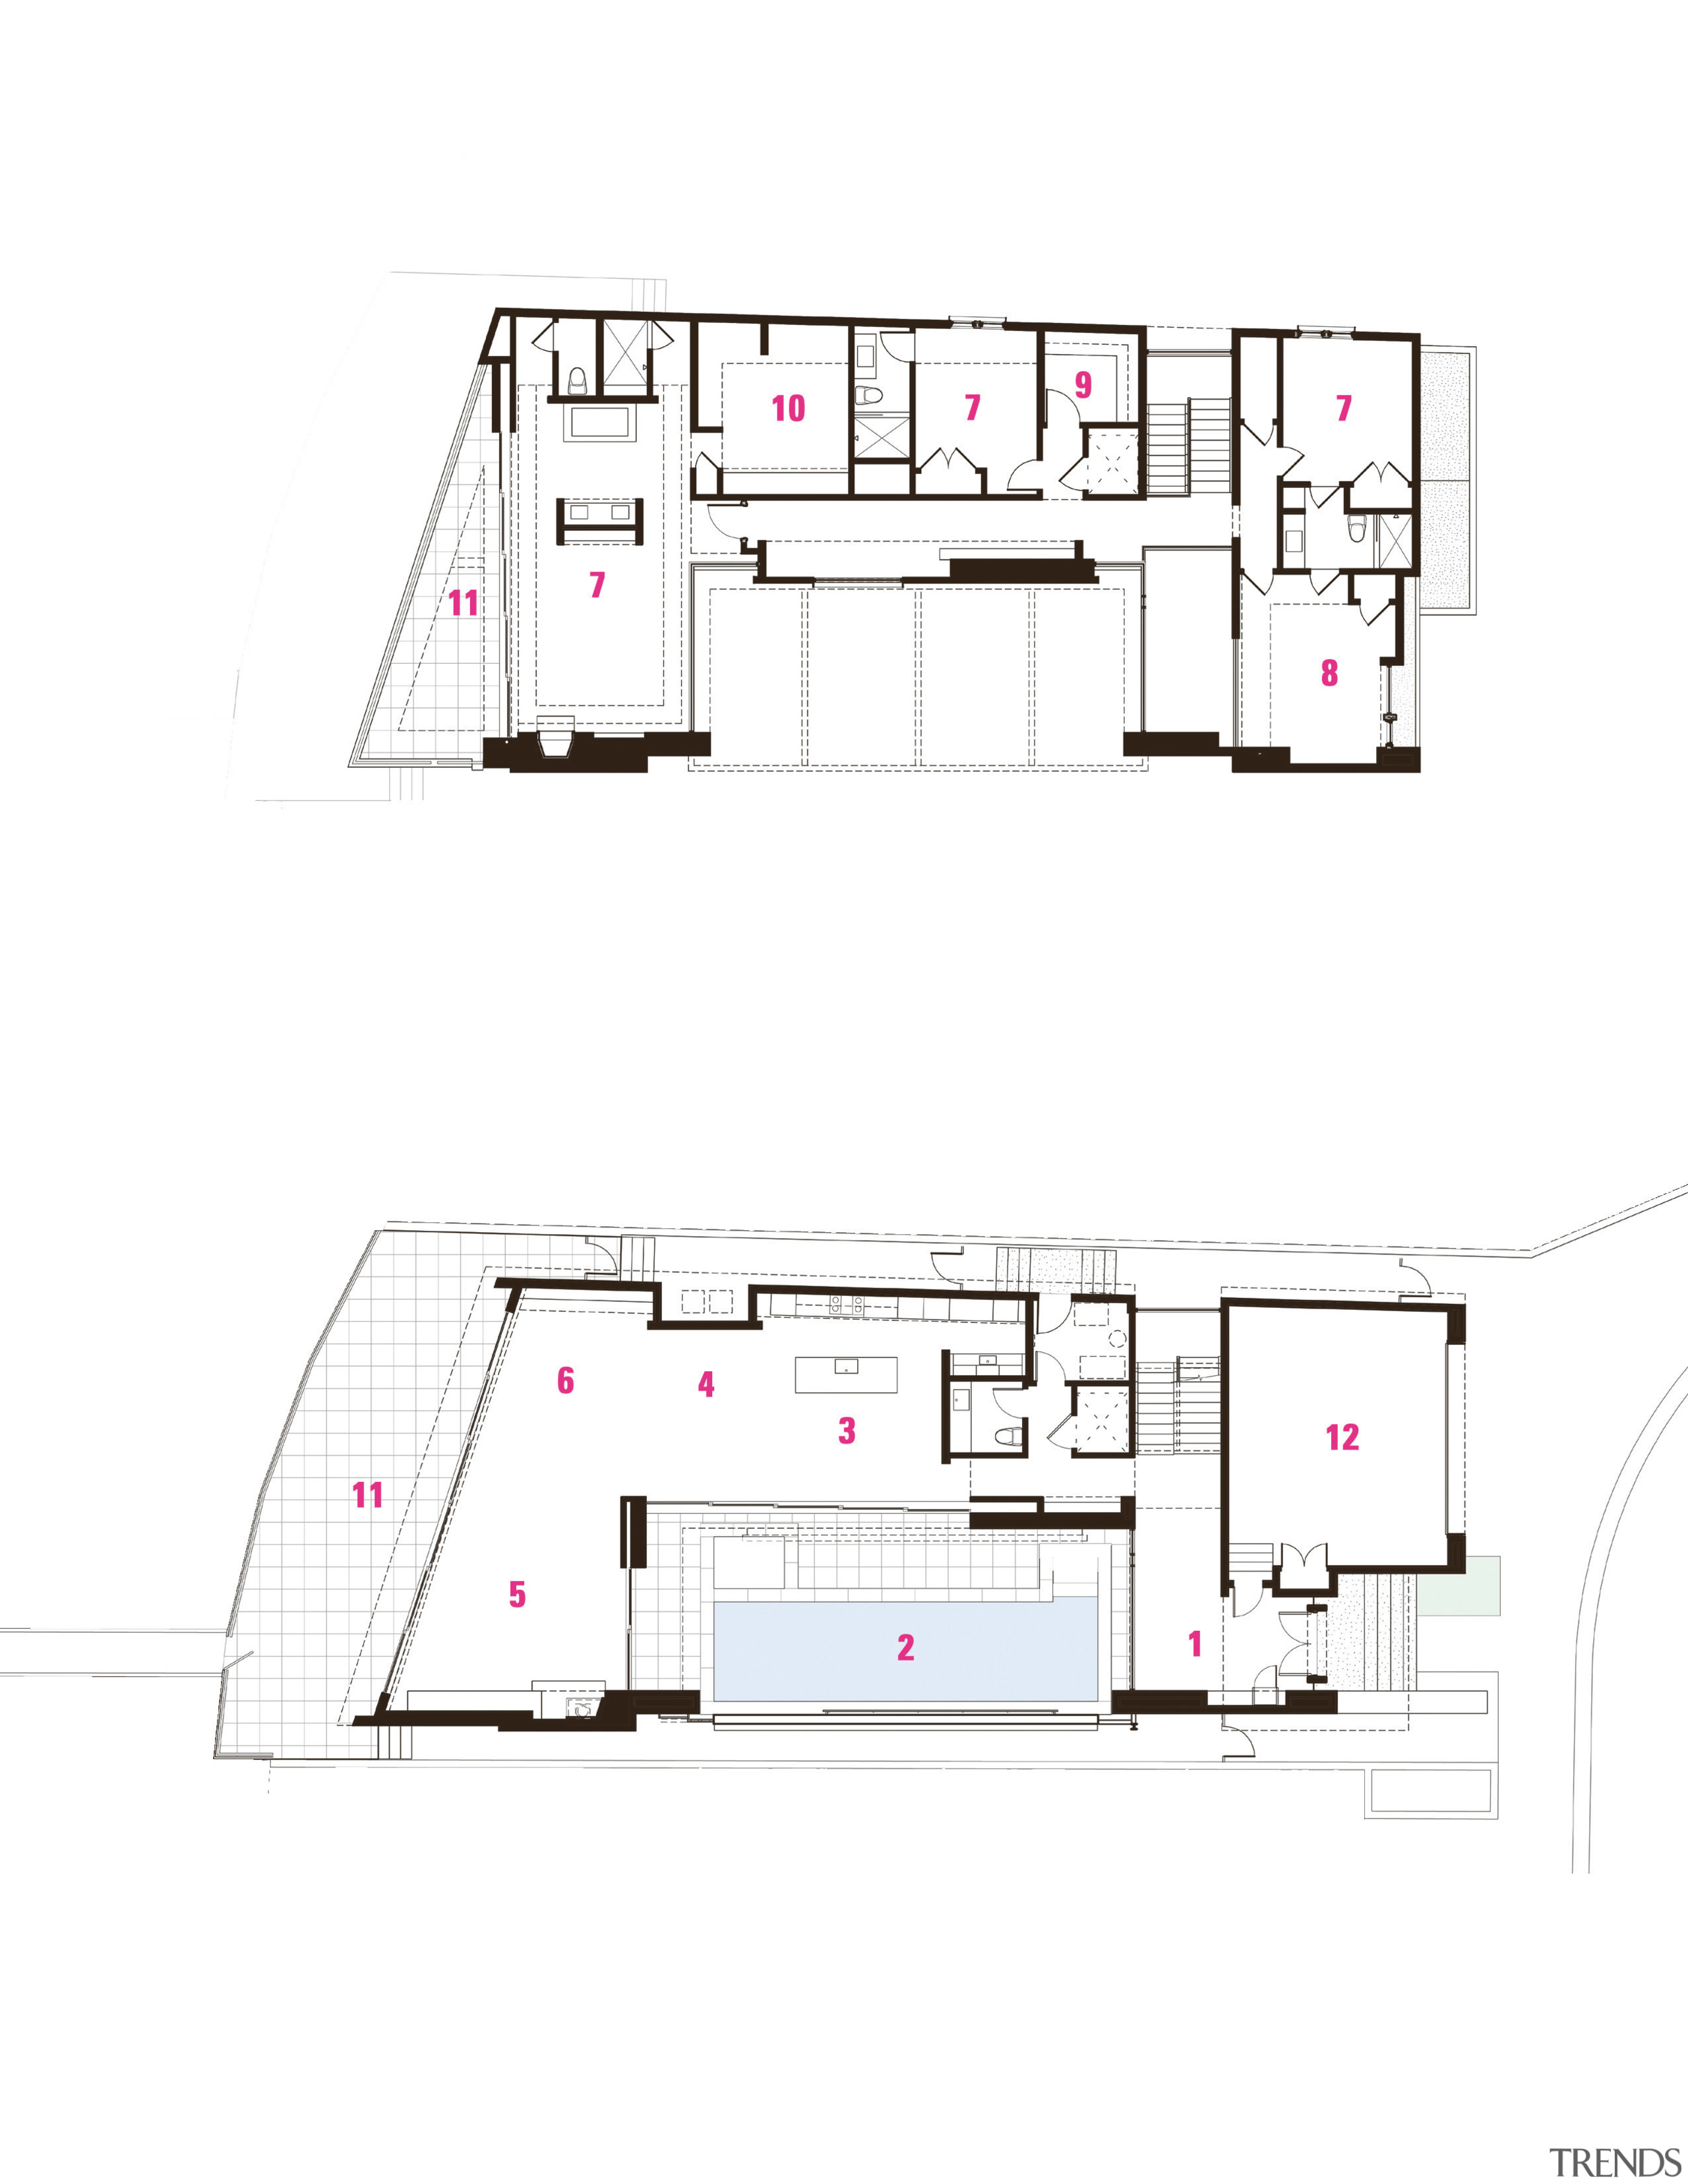 Legend: 1 entry, 2 pool, 3 kitchen, 4 area, design, diagram, floor plan, line, plan, product design, text, white